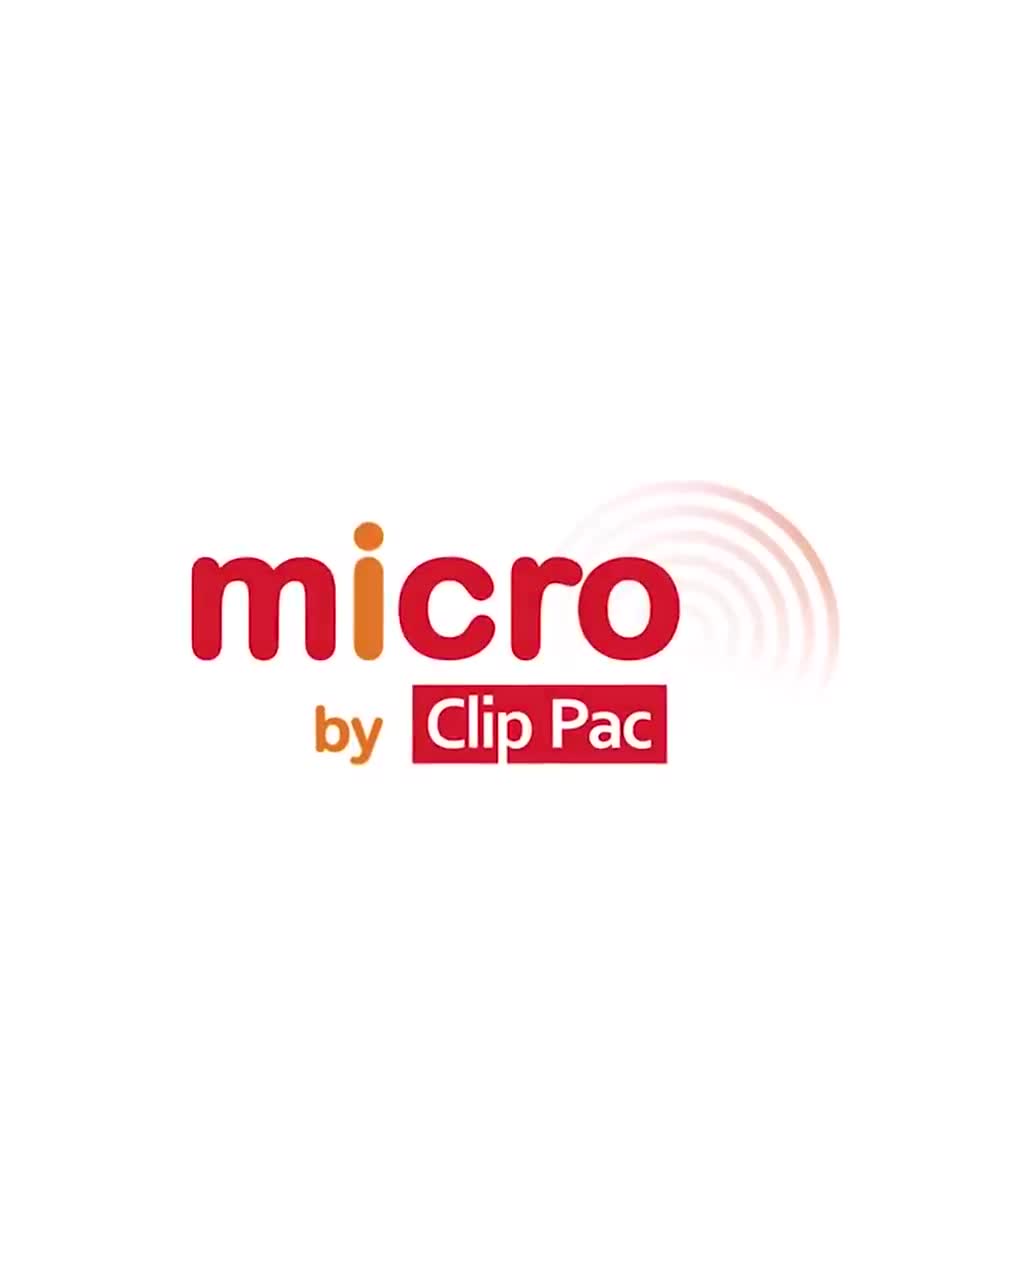 clip-pac-micro-กล่องไมโครเวฟ-กล่องอุ่นอาหาร-พร้อมตะแกรง-มีฝาปิด-2600-มล-รุ่น-107-มี-bpa-free